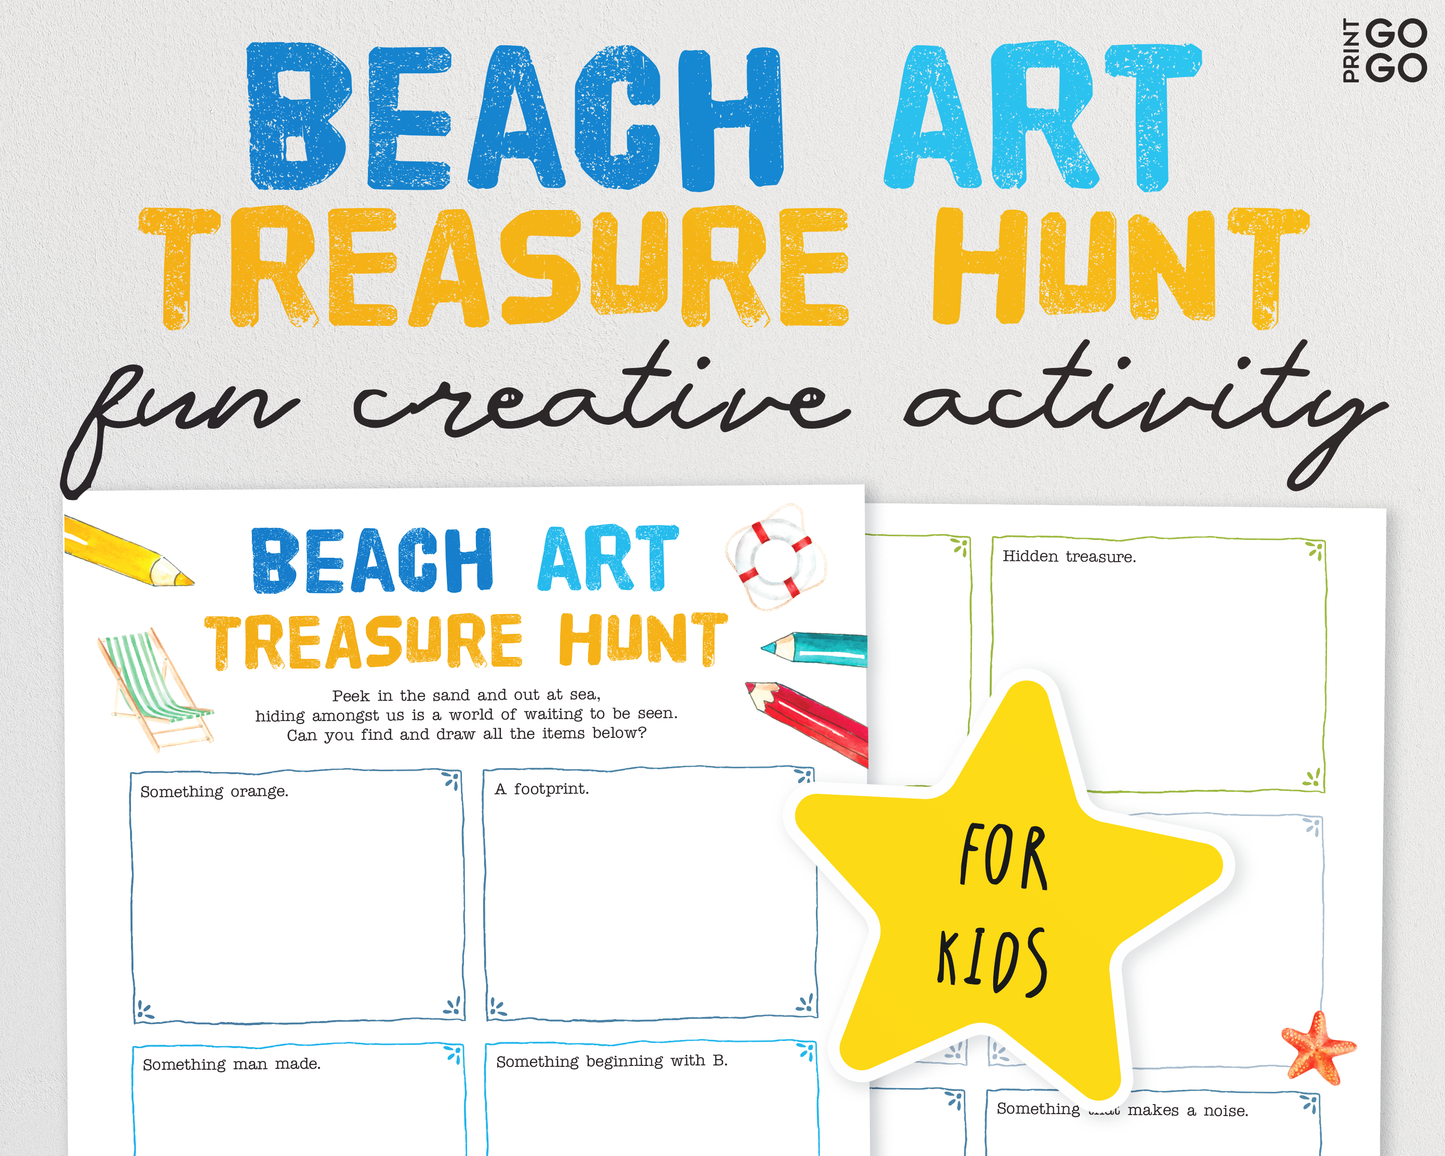 Beach Art Treasure Hunt for Kids